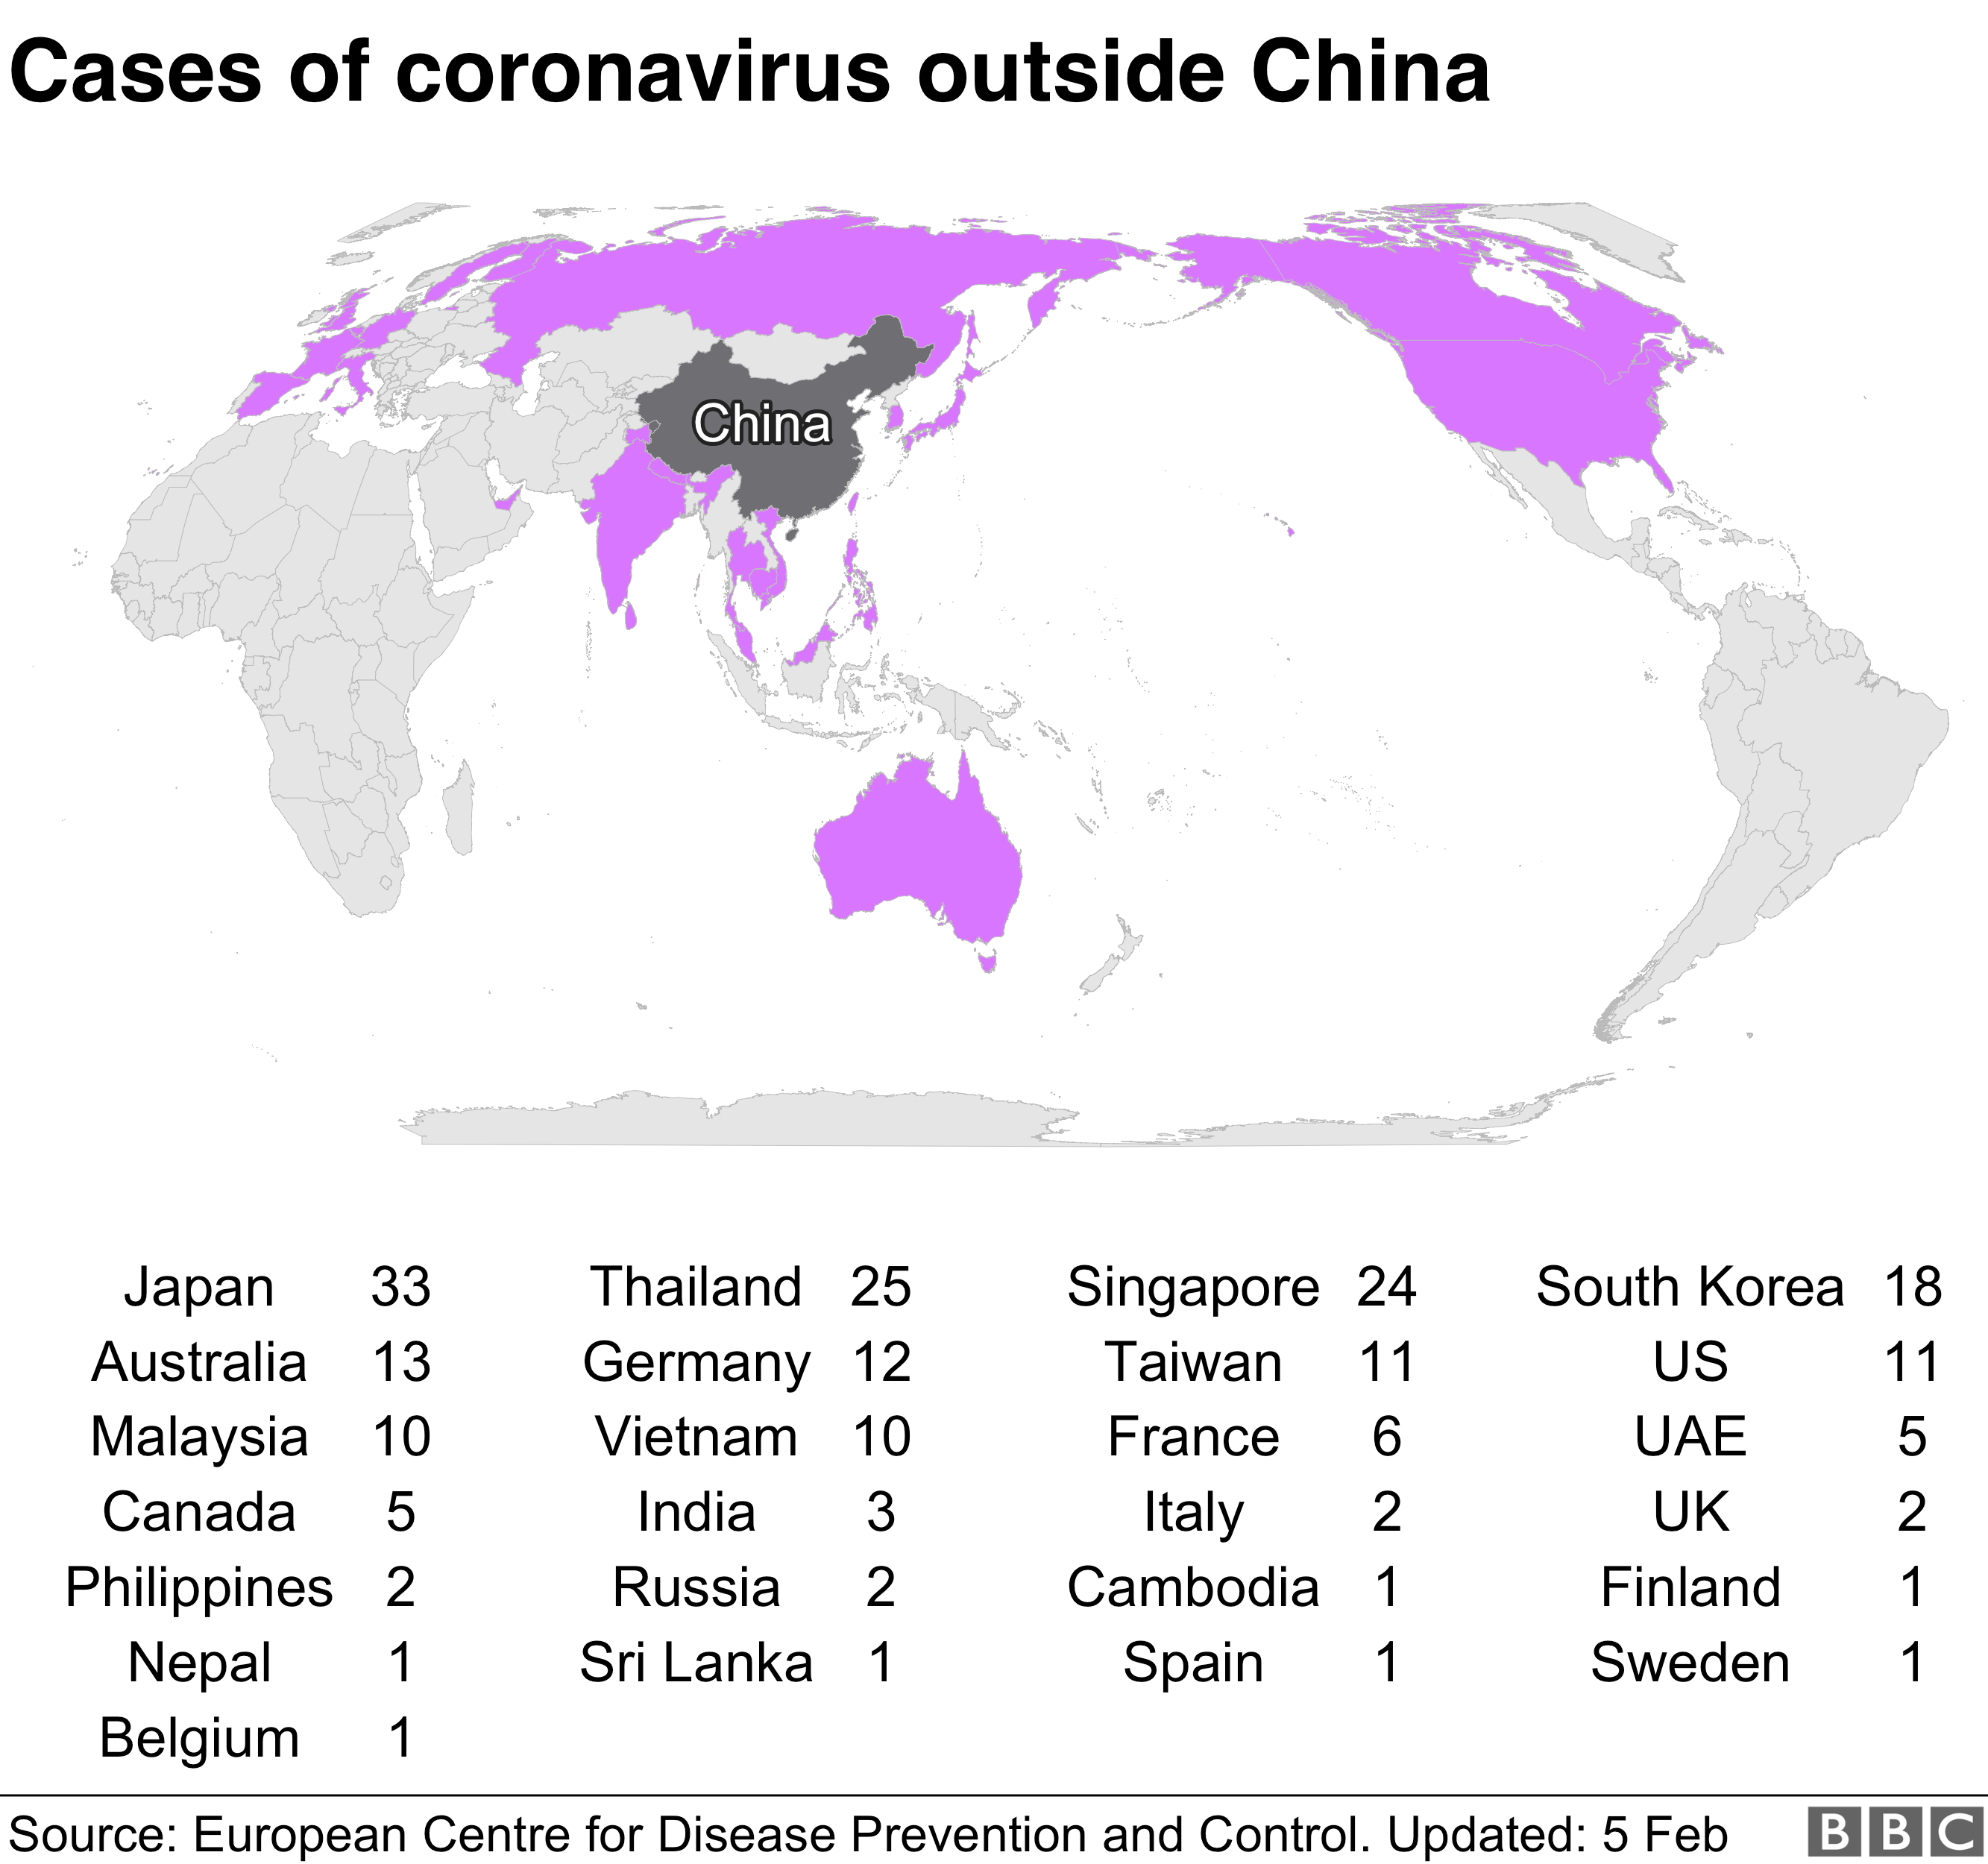 Coronavirus has spread to 25 countries across the world. Japan has 33 cases, Thailand 25, Singapore 24 and South Korea 18.